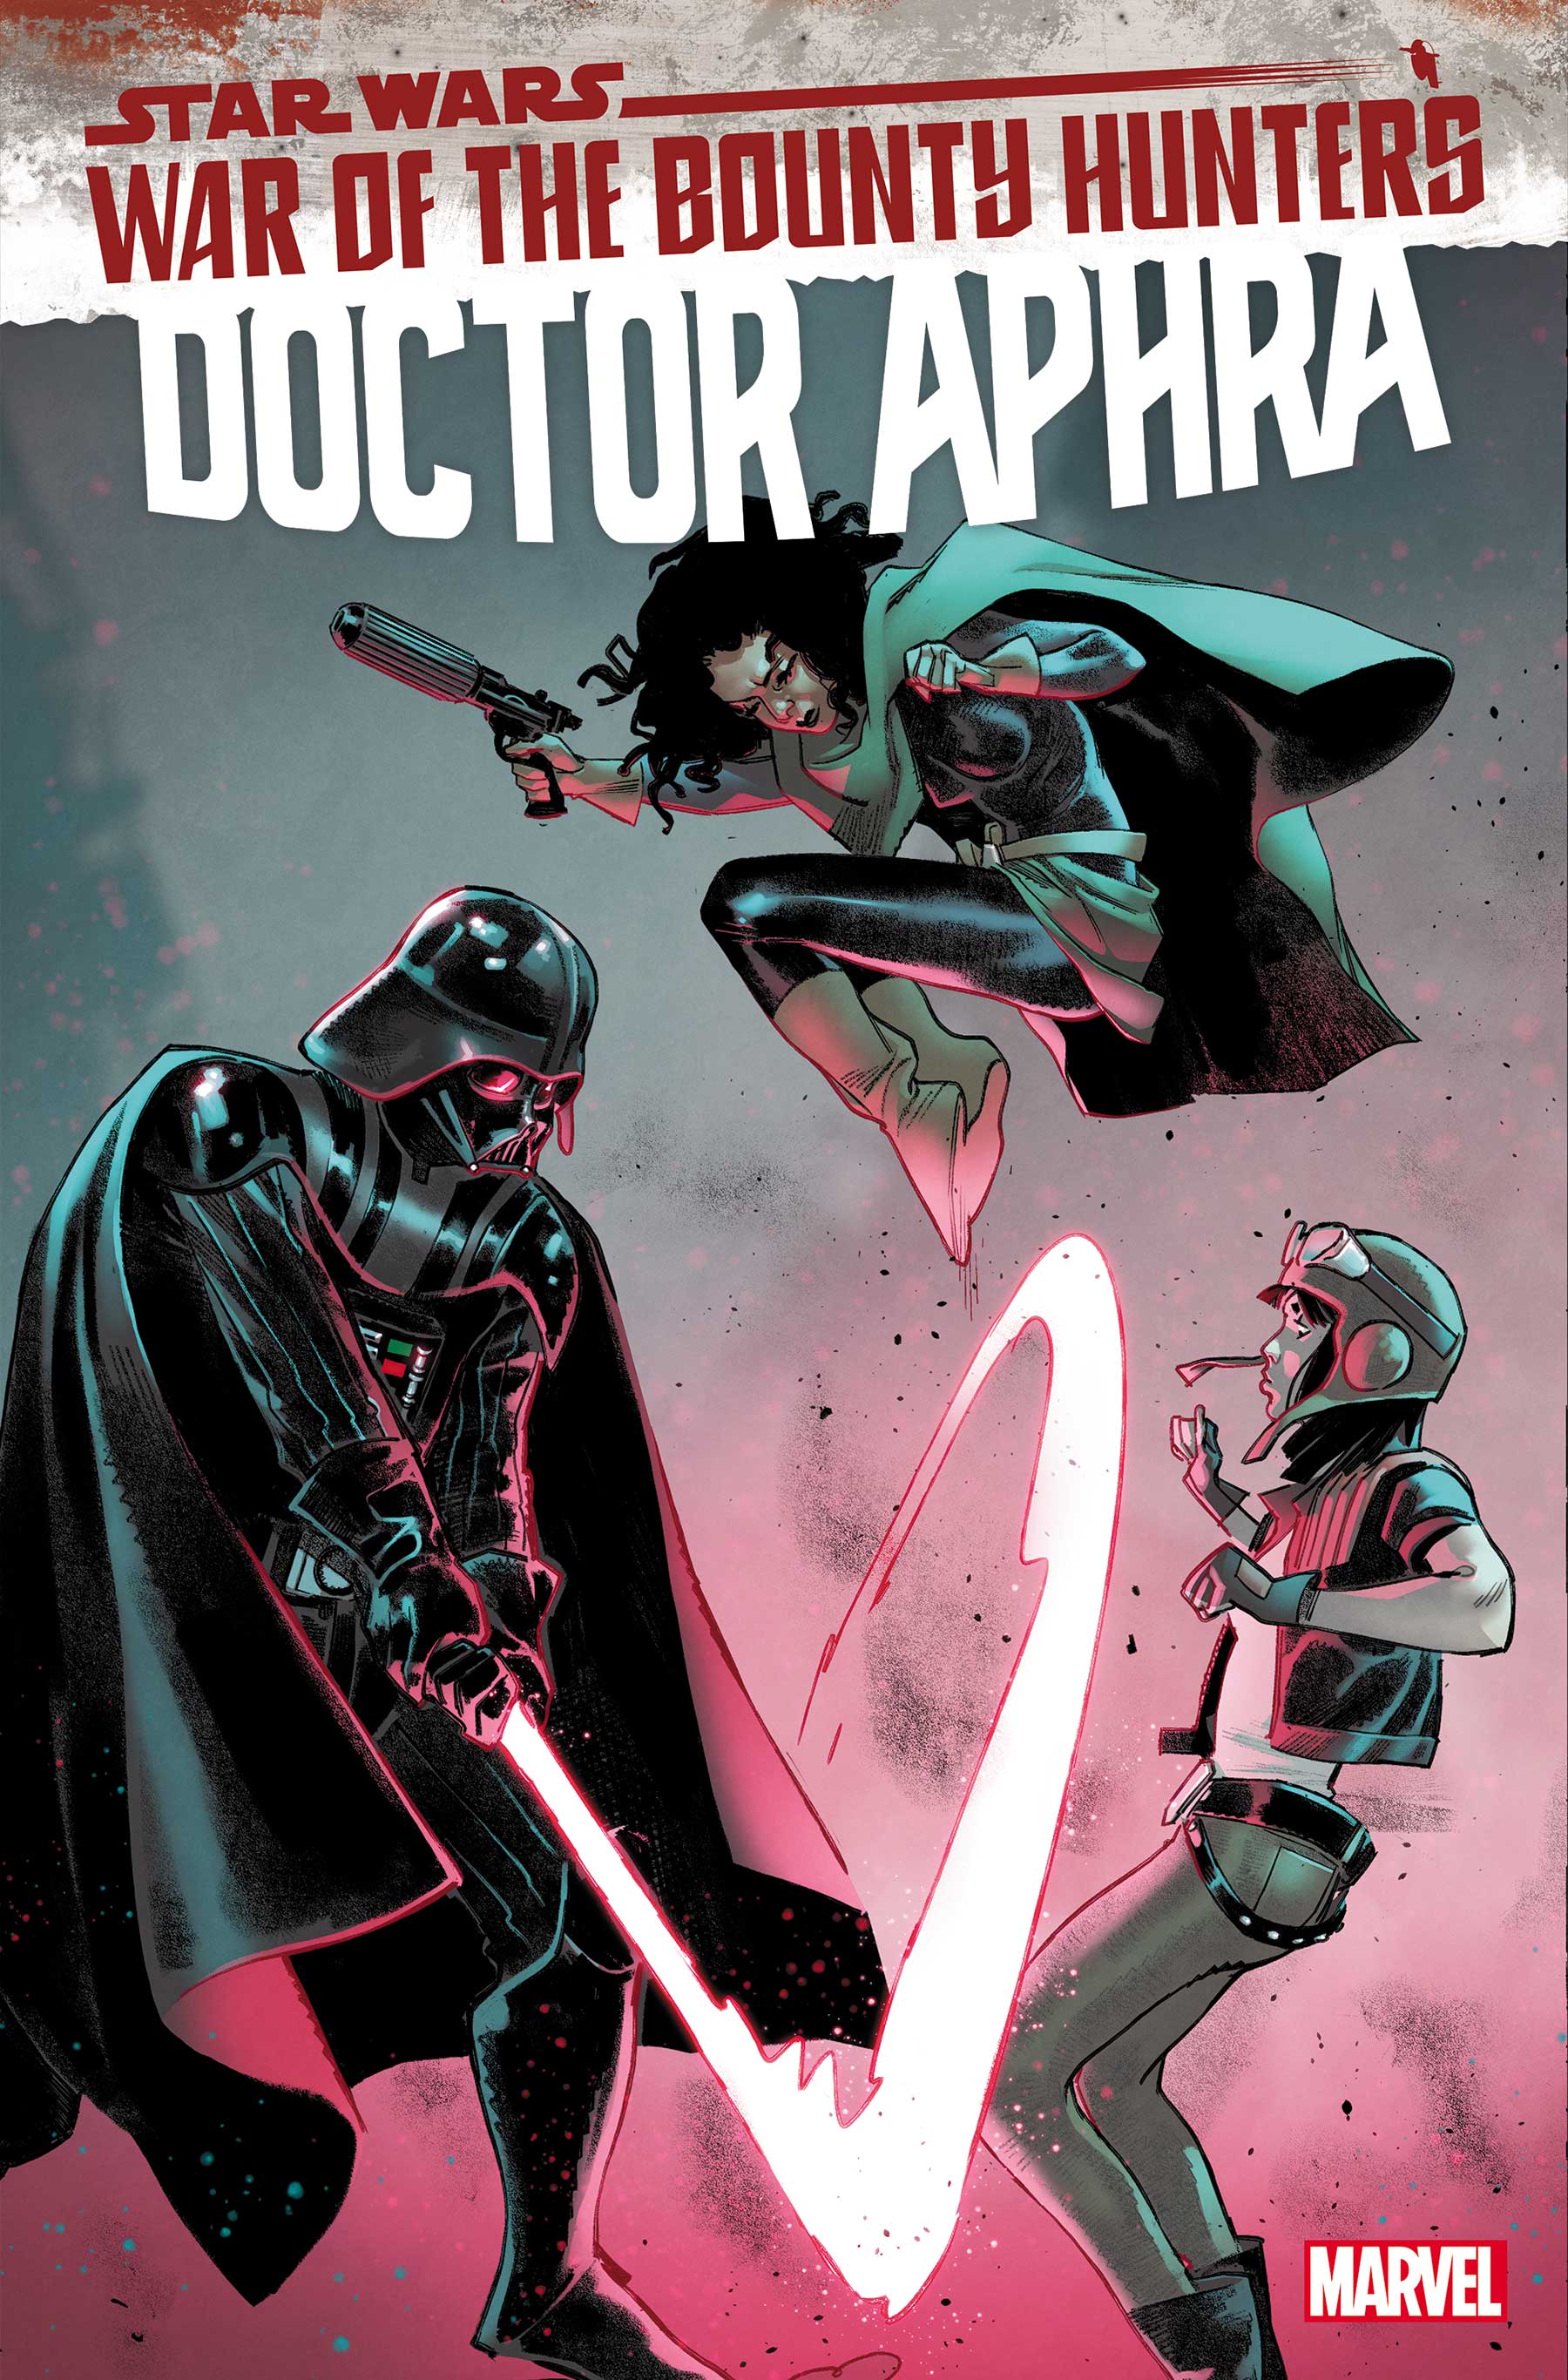 Star Wars: Doctor Aphra (2020) #13